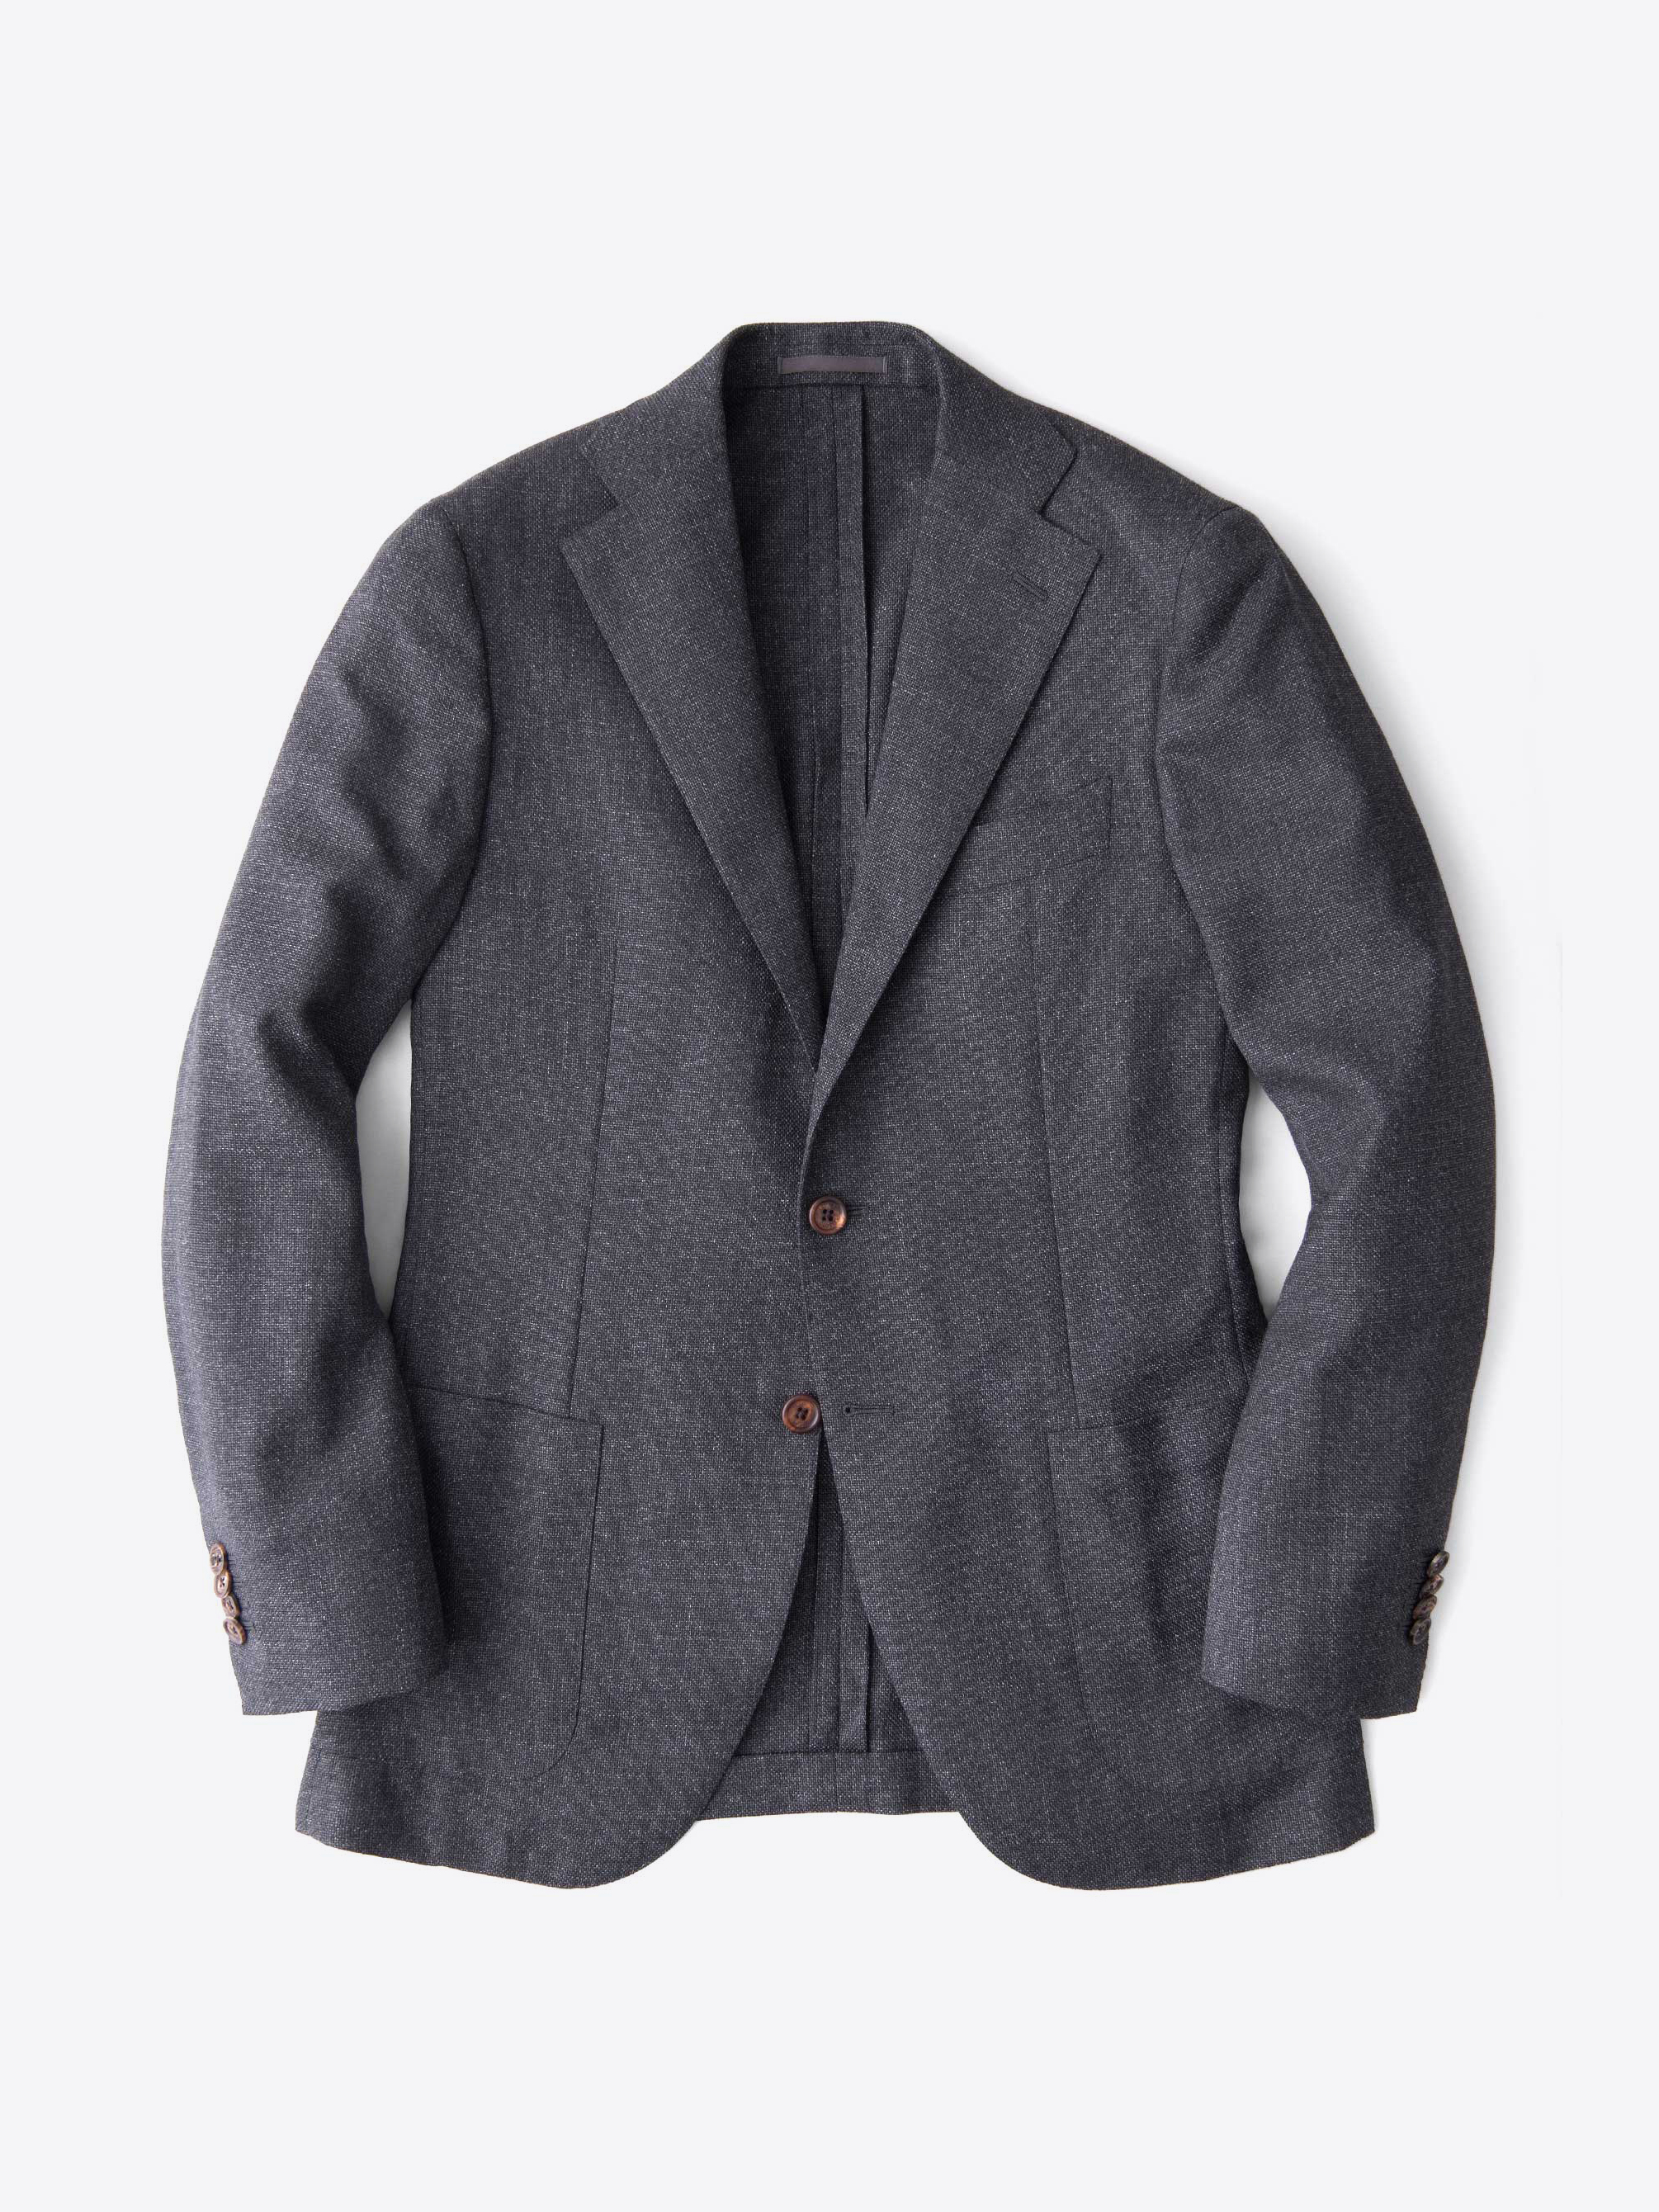 Zoom Image of Hudson Grey Melange Wool Hopsack Jacket